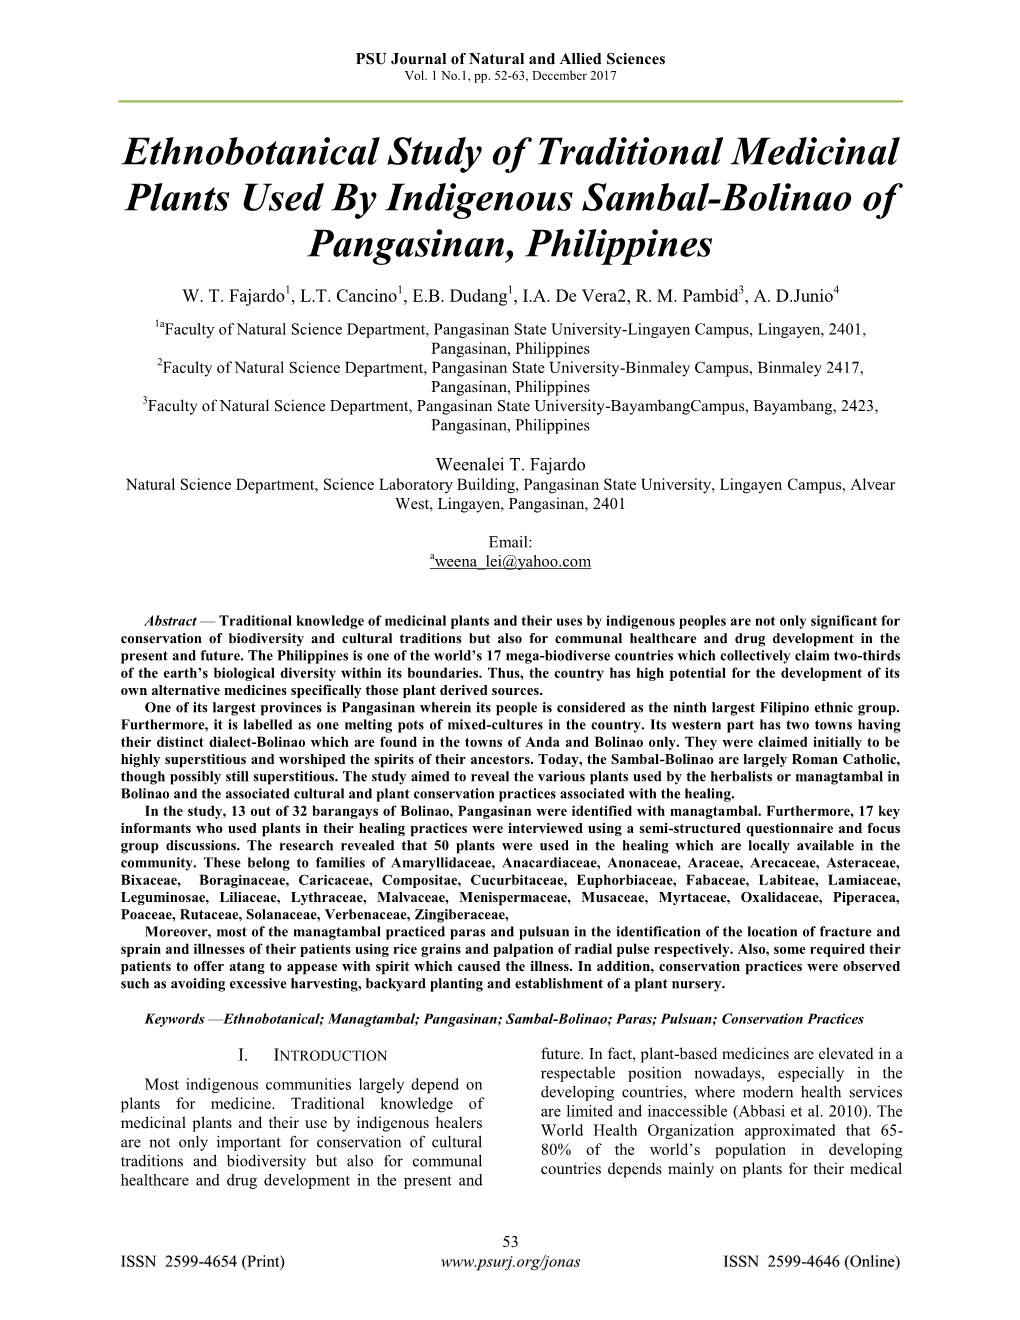 Ethnobotanical Study of Traditional Medicinal Plants Used by Indigenous Sambal-Bolinao of Pangasinan, Philippines